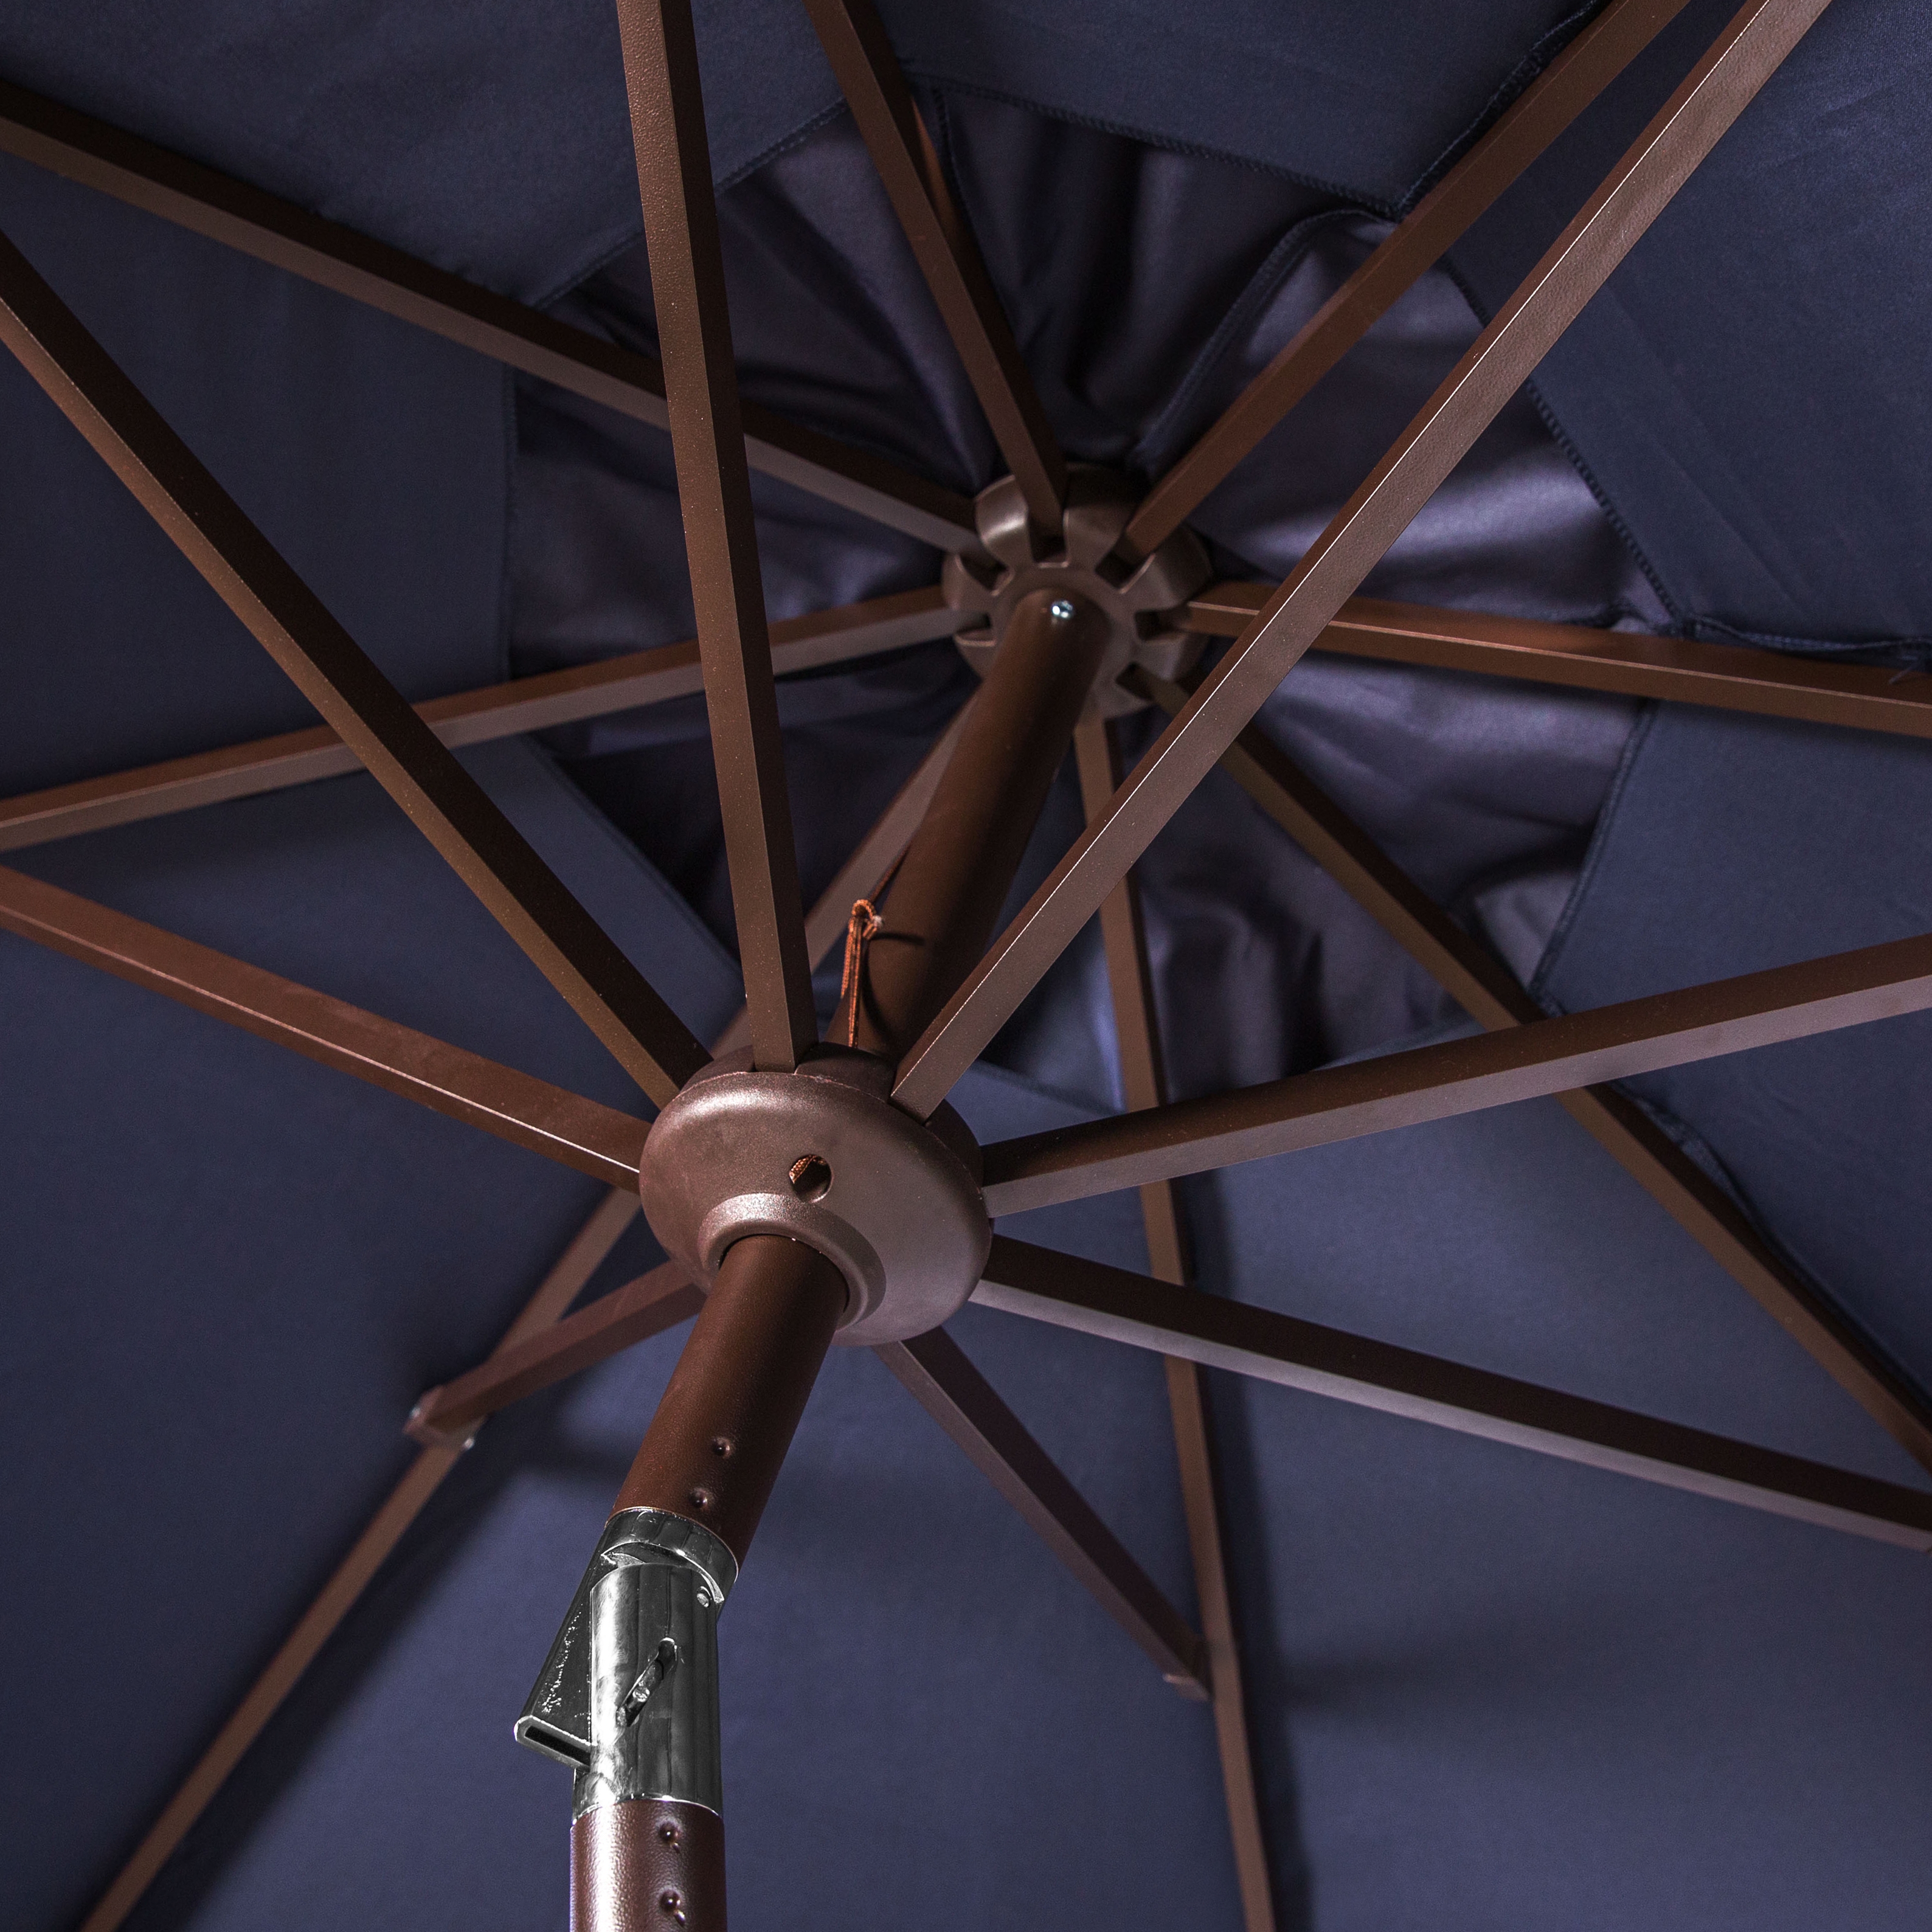 Uv Resistant Ortega 9 Ft Auto Tilt Crank Umbrella - Navy - Arlo Home - Image 2